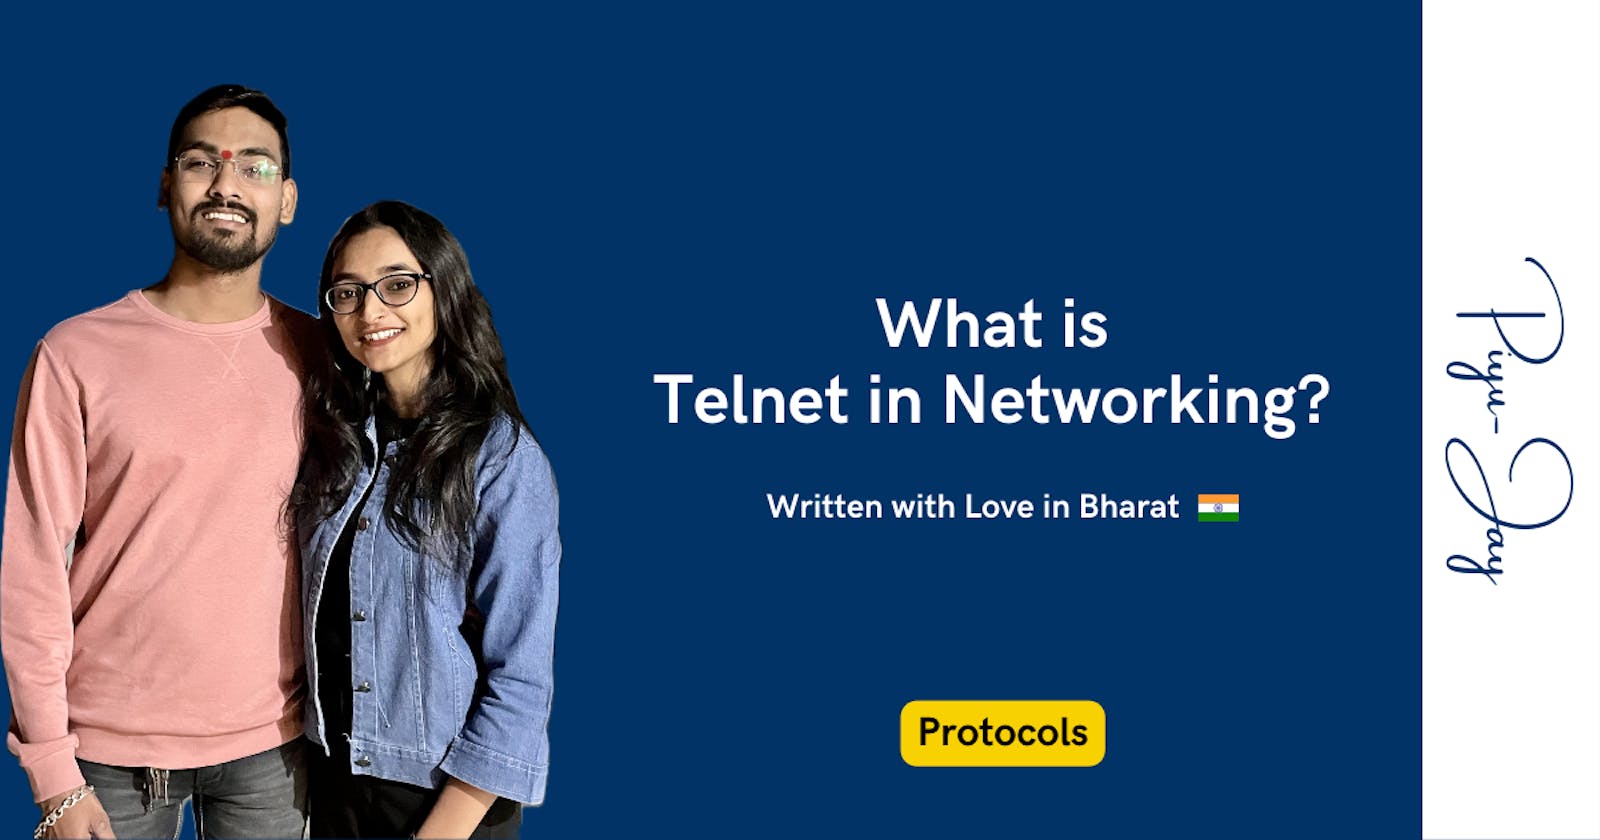 What is Telnet in Networking?